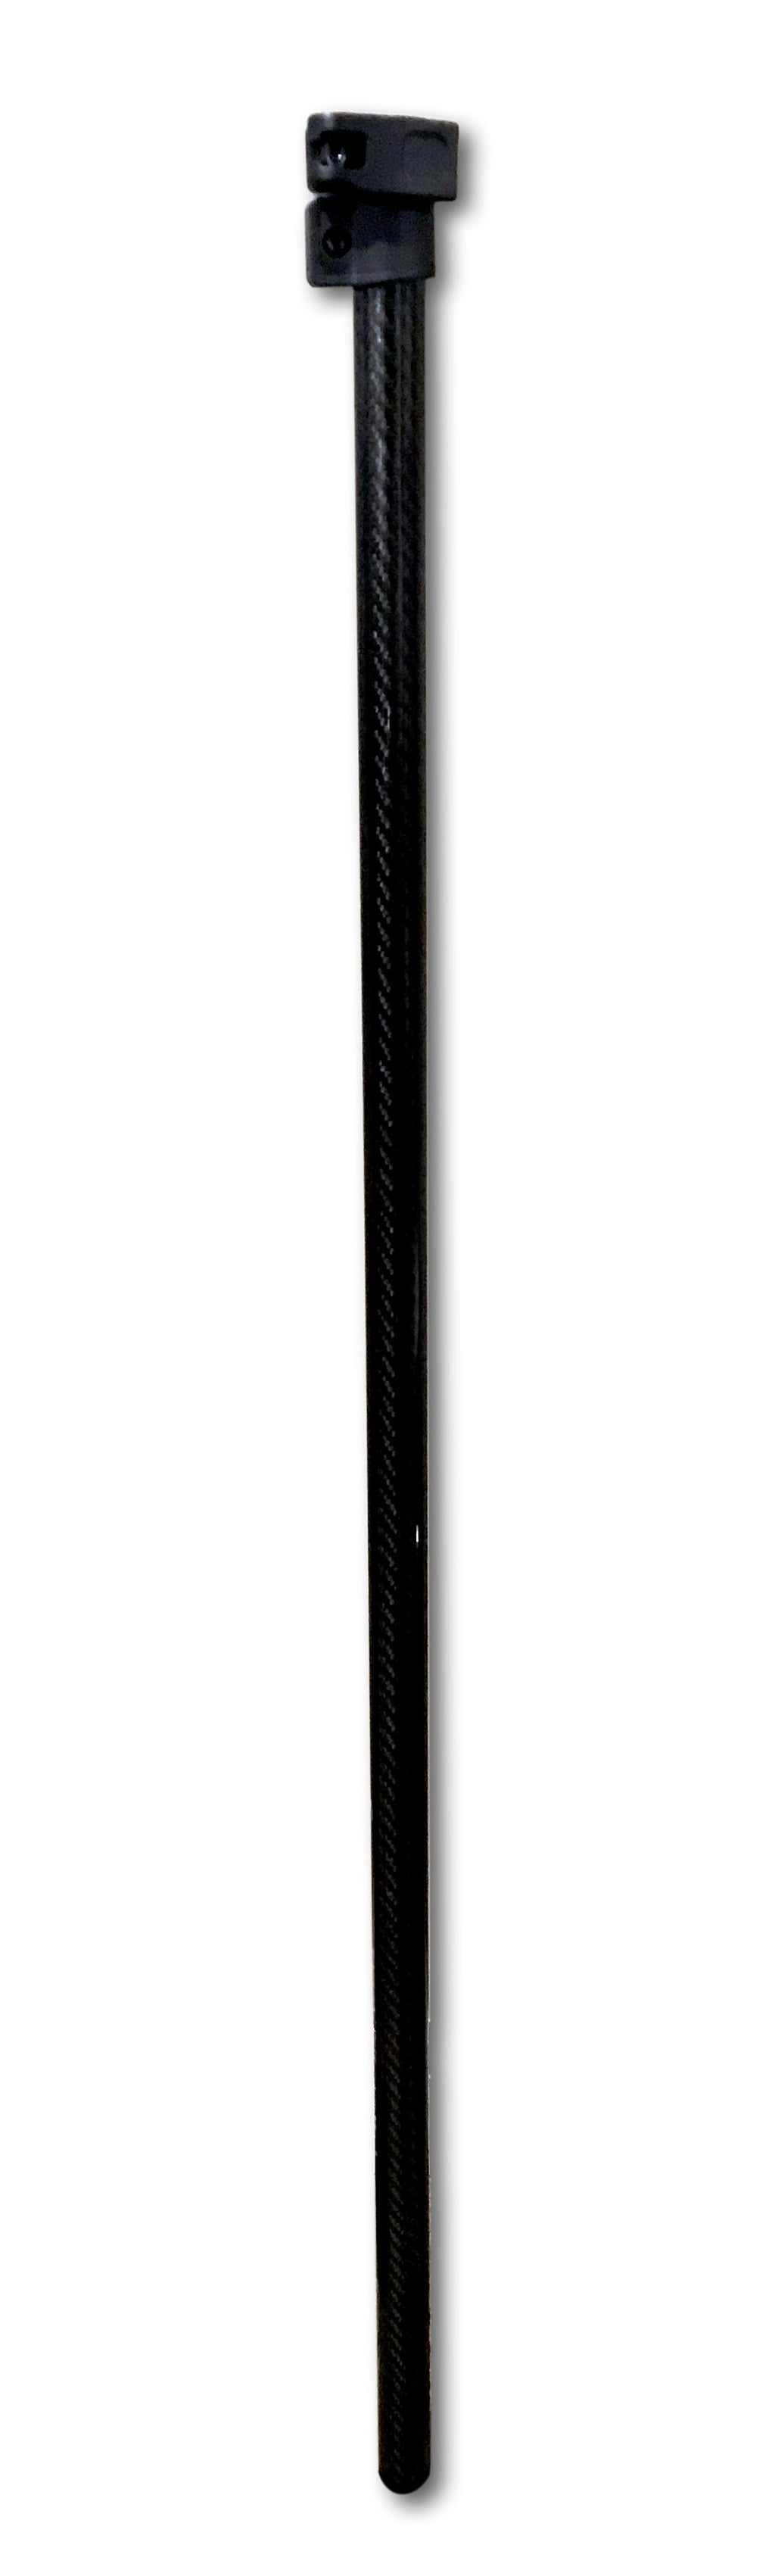 Steves Detector Rods Carbon Fiber Upper Shaft for Minelab Equinox 600/800 Black with End Cap